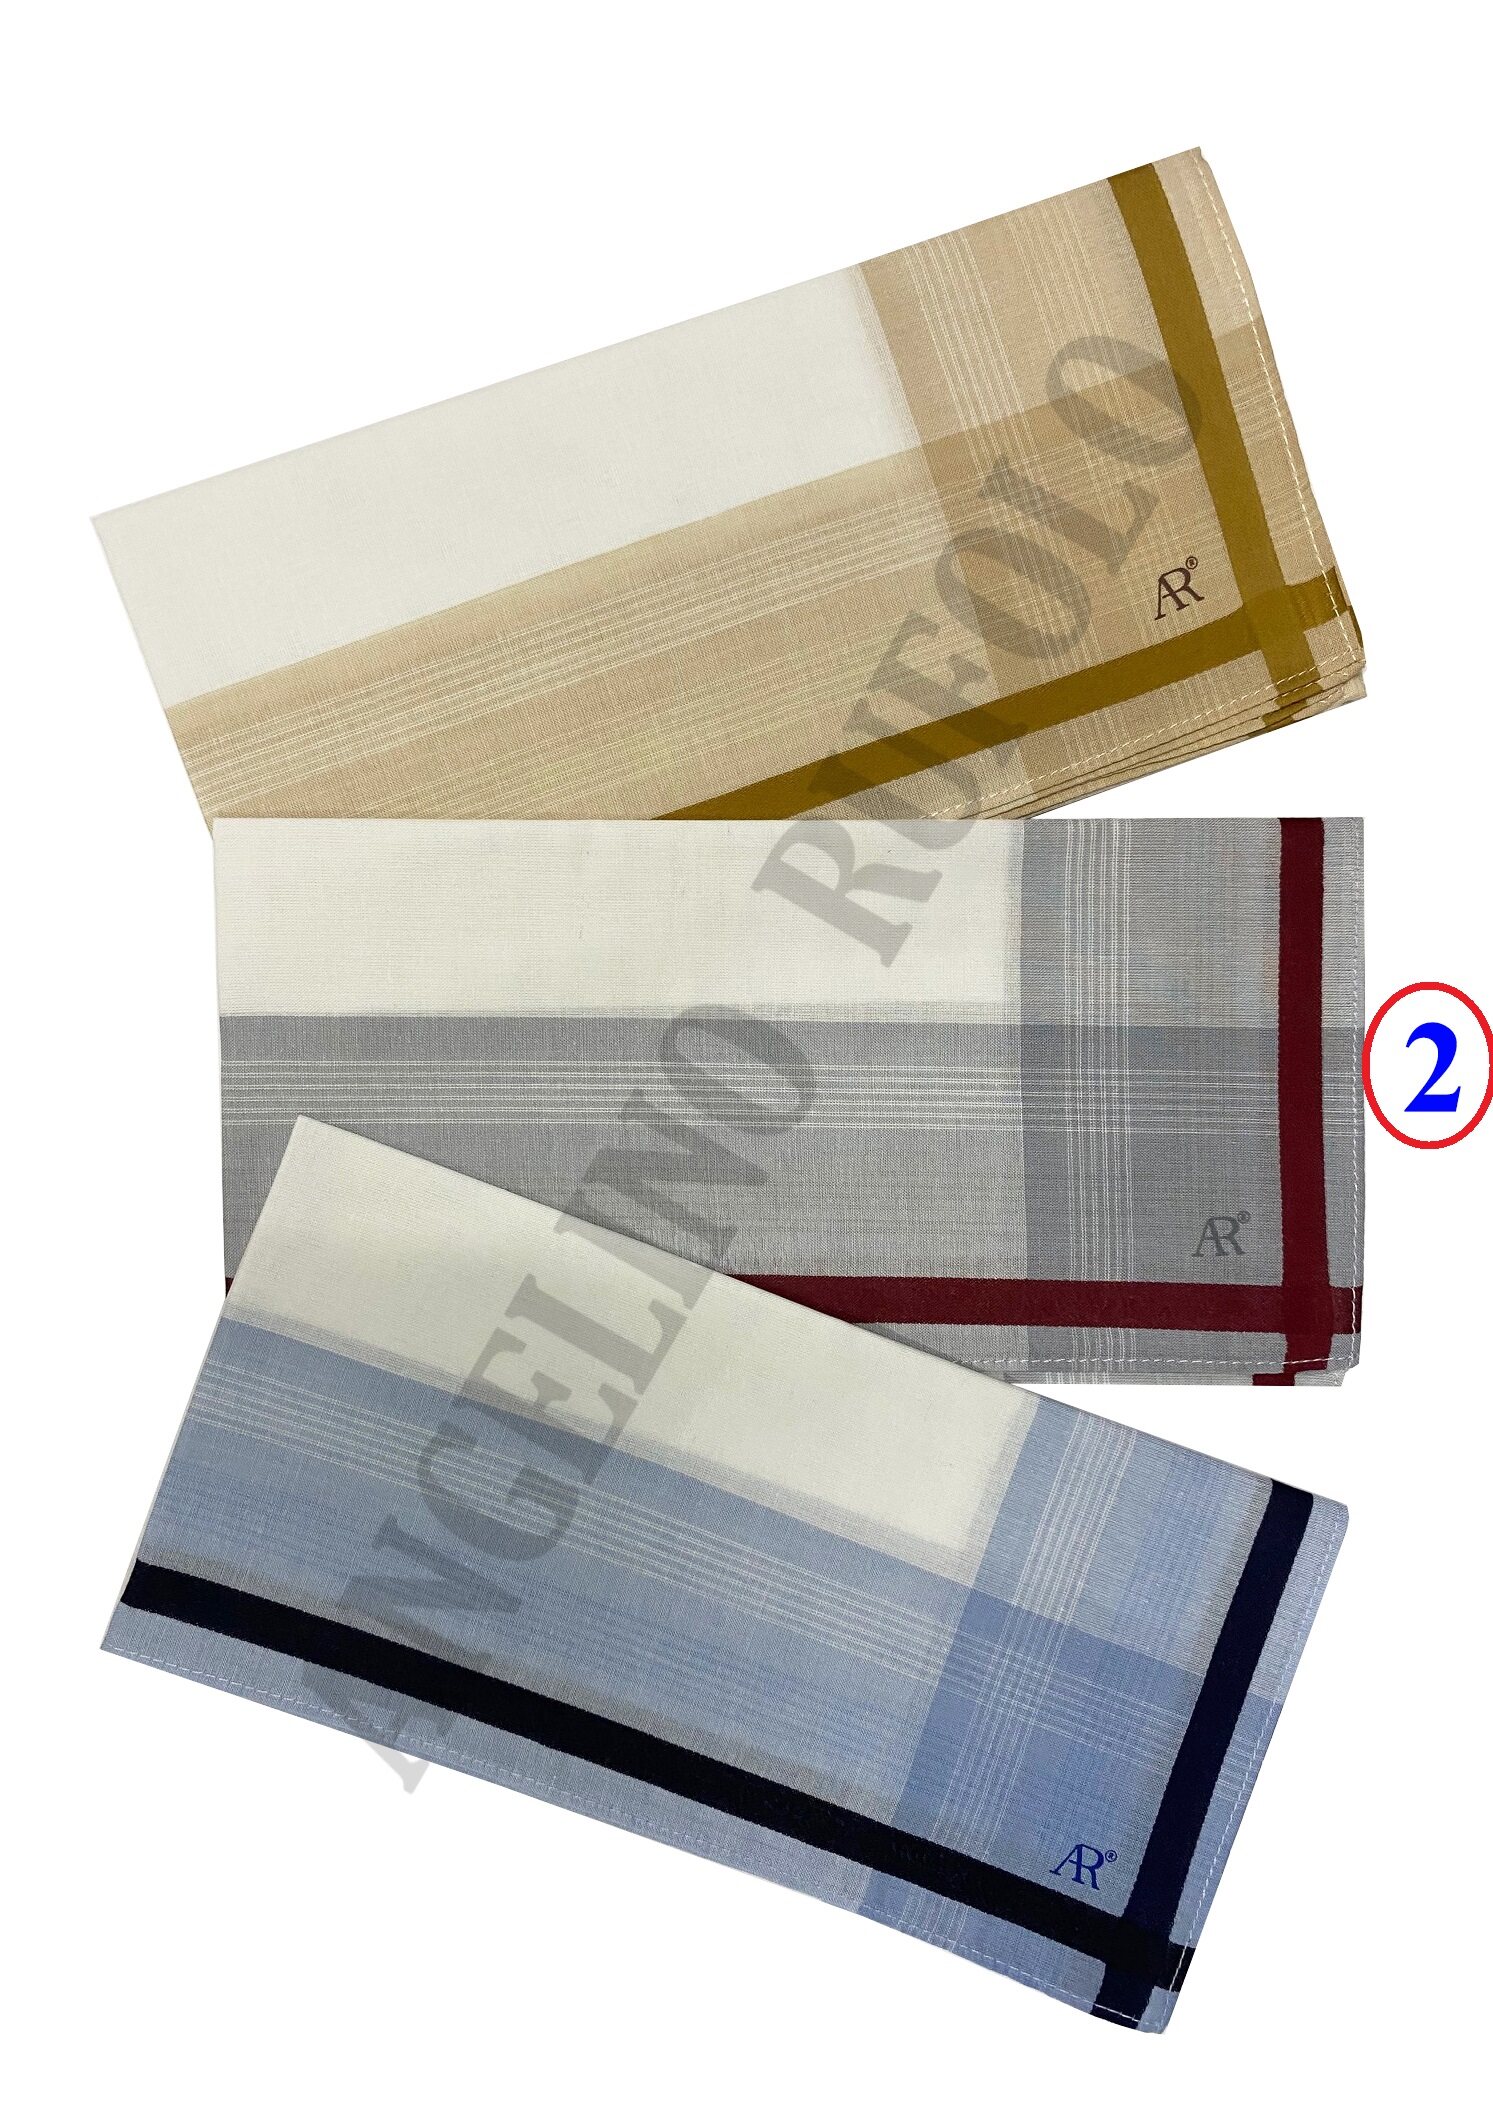 ANGELINO RUFOLO Handkerchief (ผ้าเช็ดหน้า) ผ้า 100% COTTON คุณภาพเยี่ยม ดีไซน์ Classic สีขาว-เบจ/สีขาว-เทา/สีขาว-ฟ้า